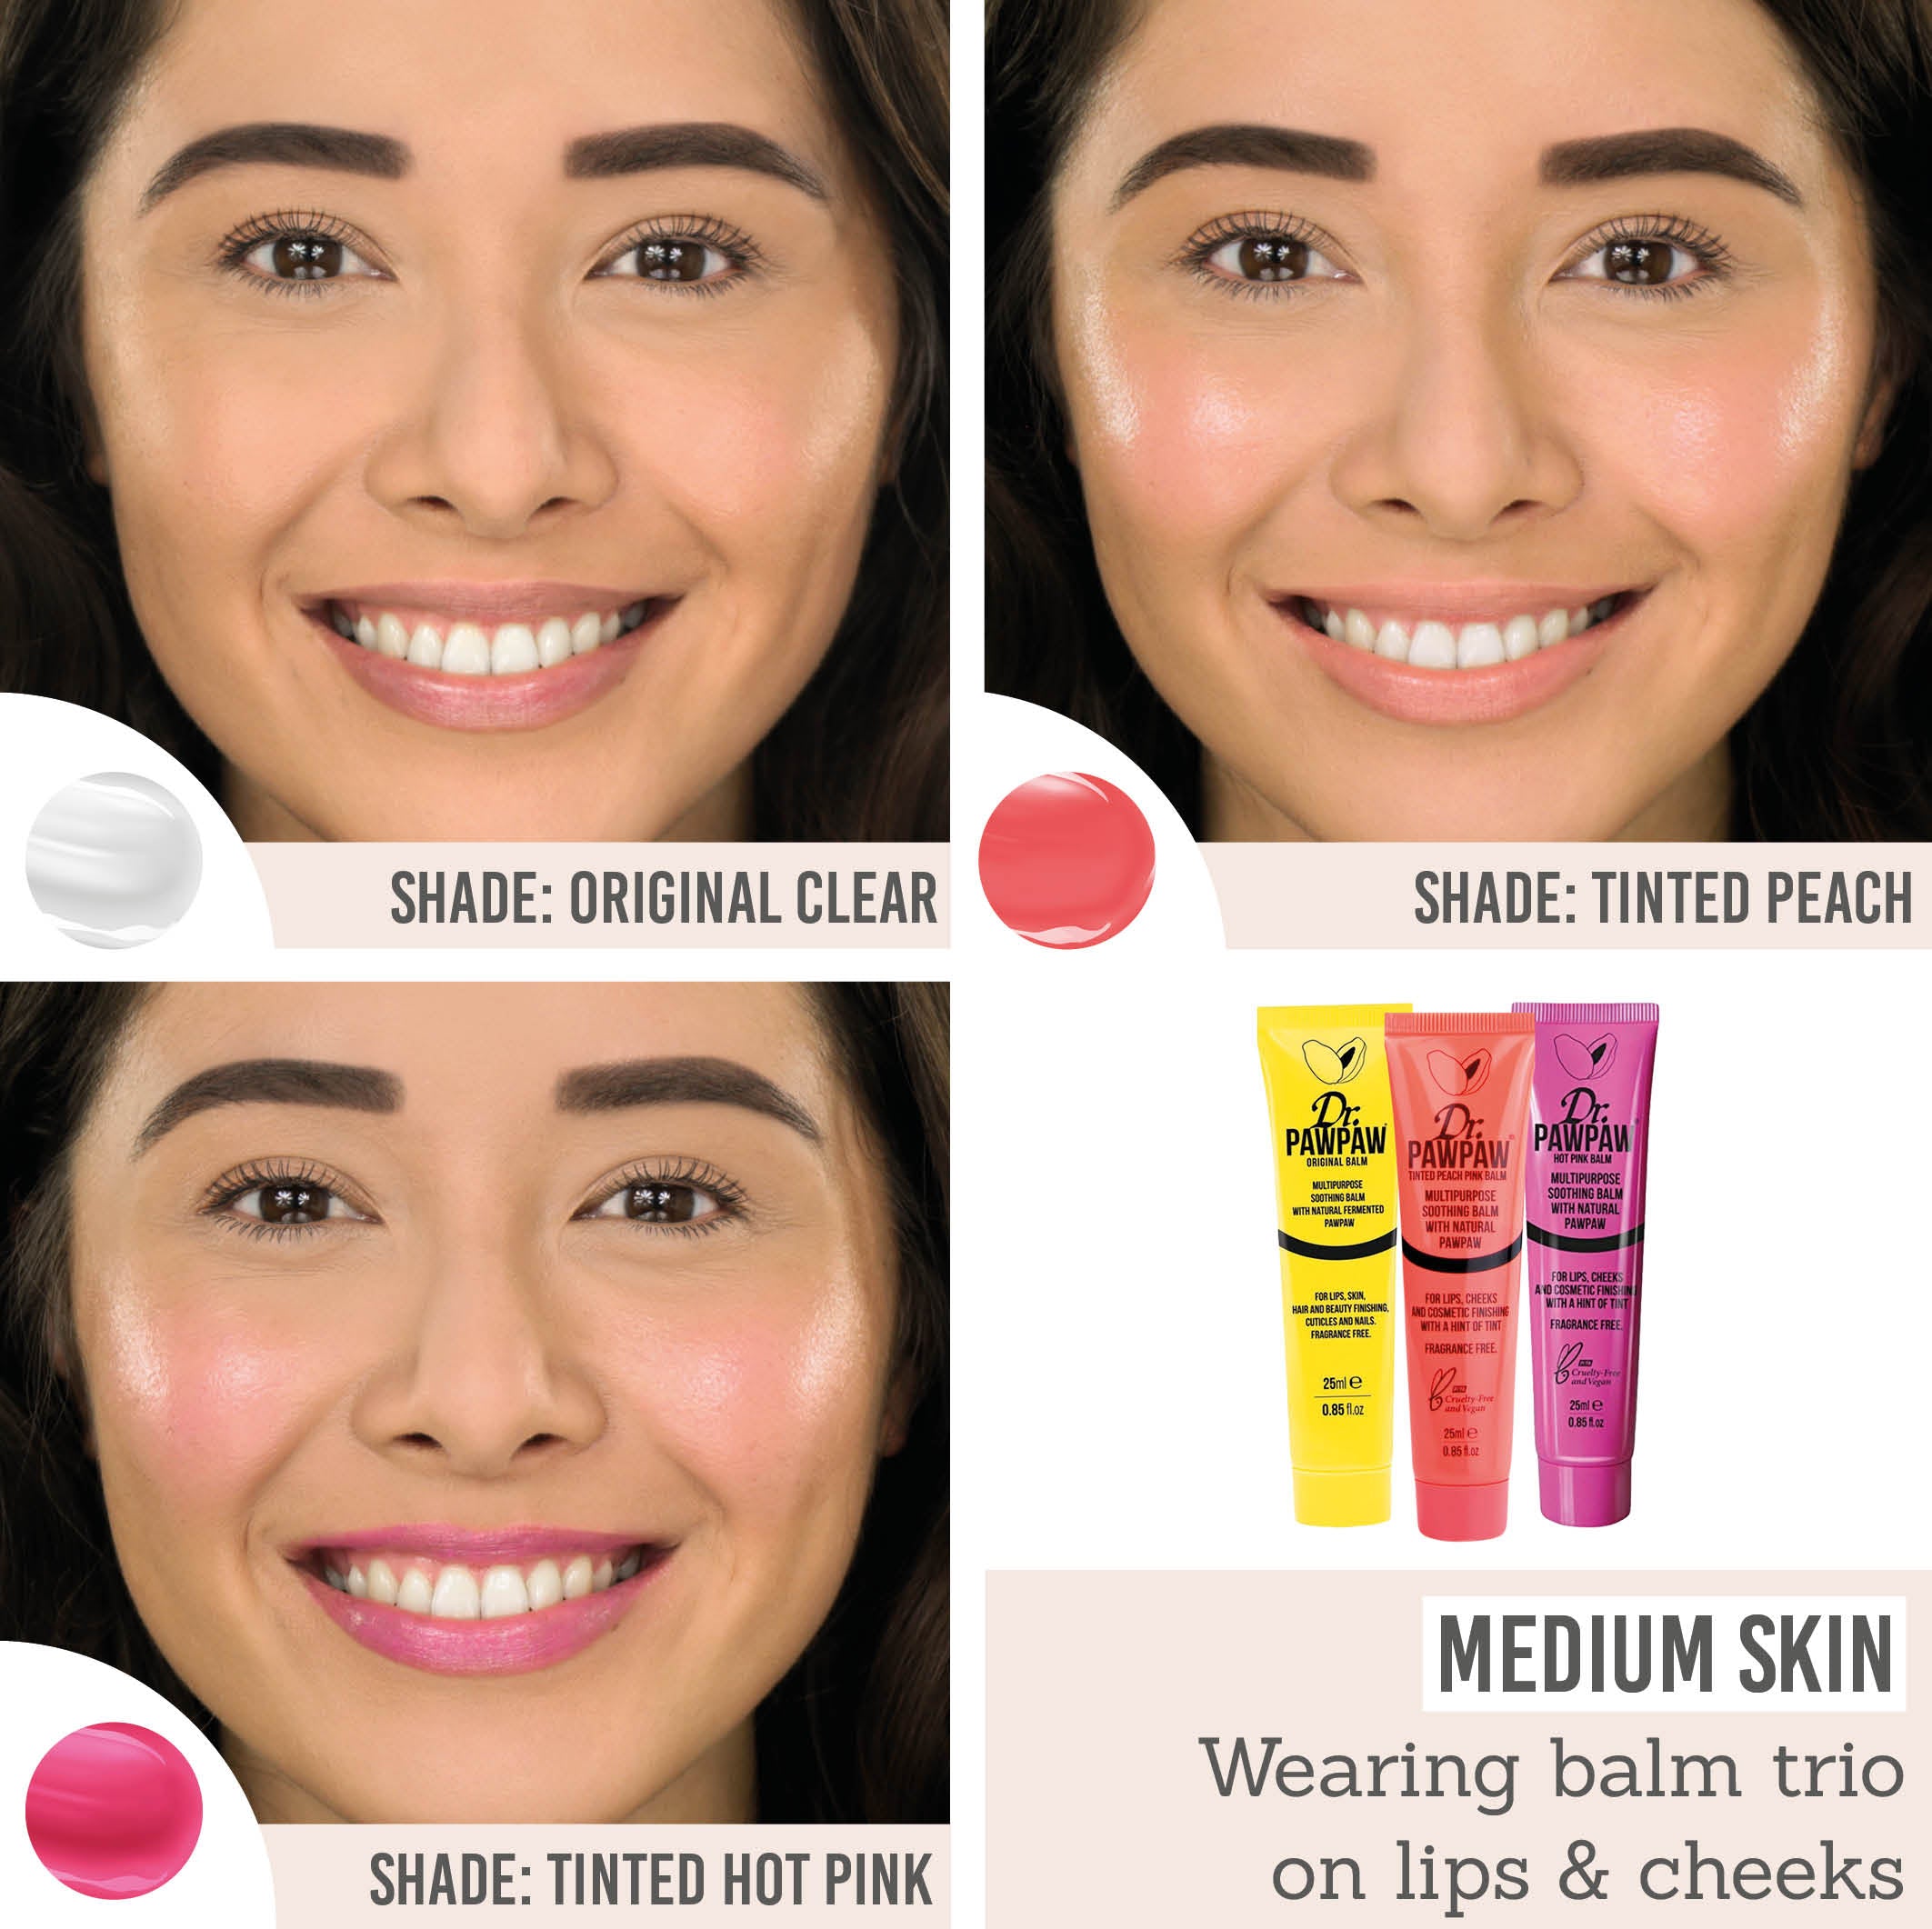 Dr PAWPAW Balm Trio results on medium skin